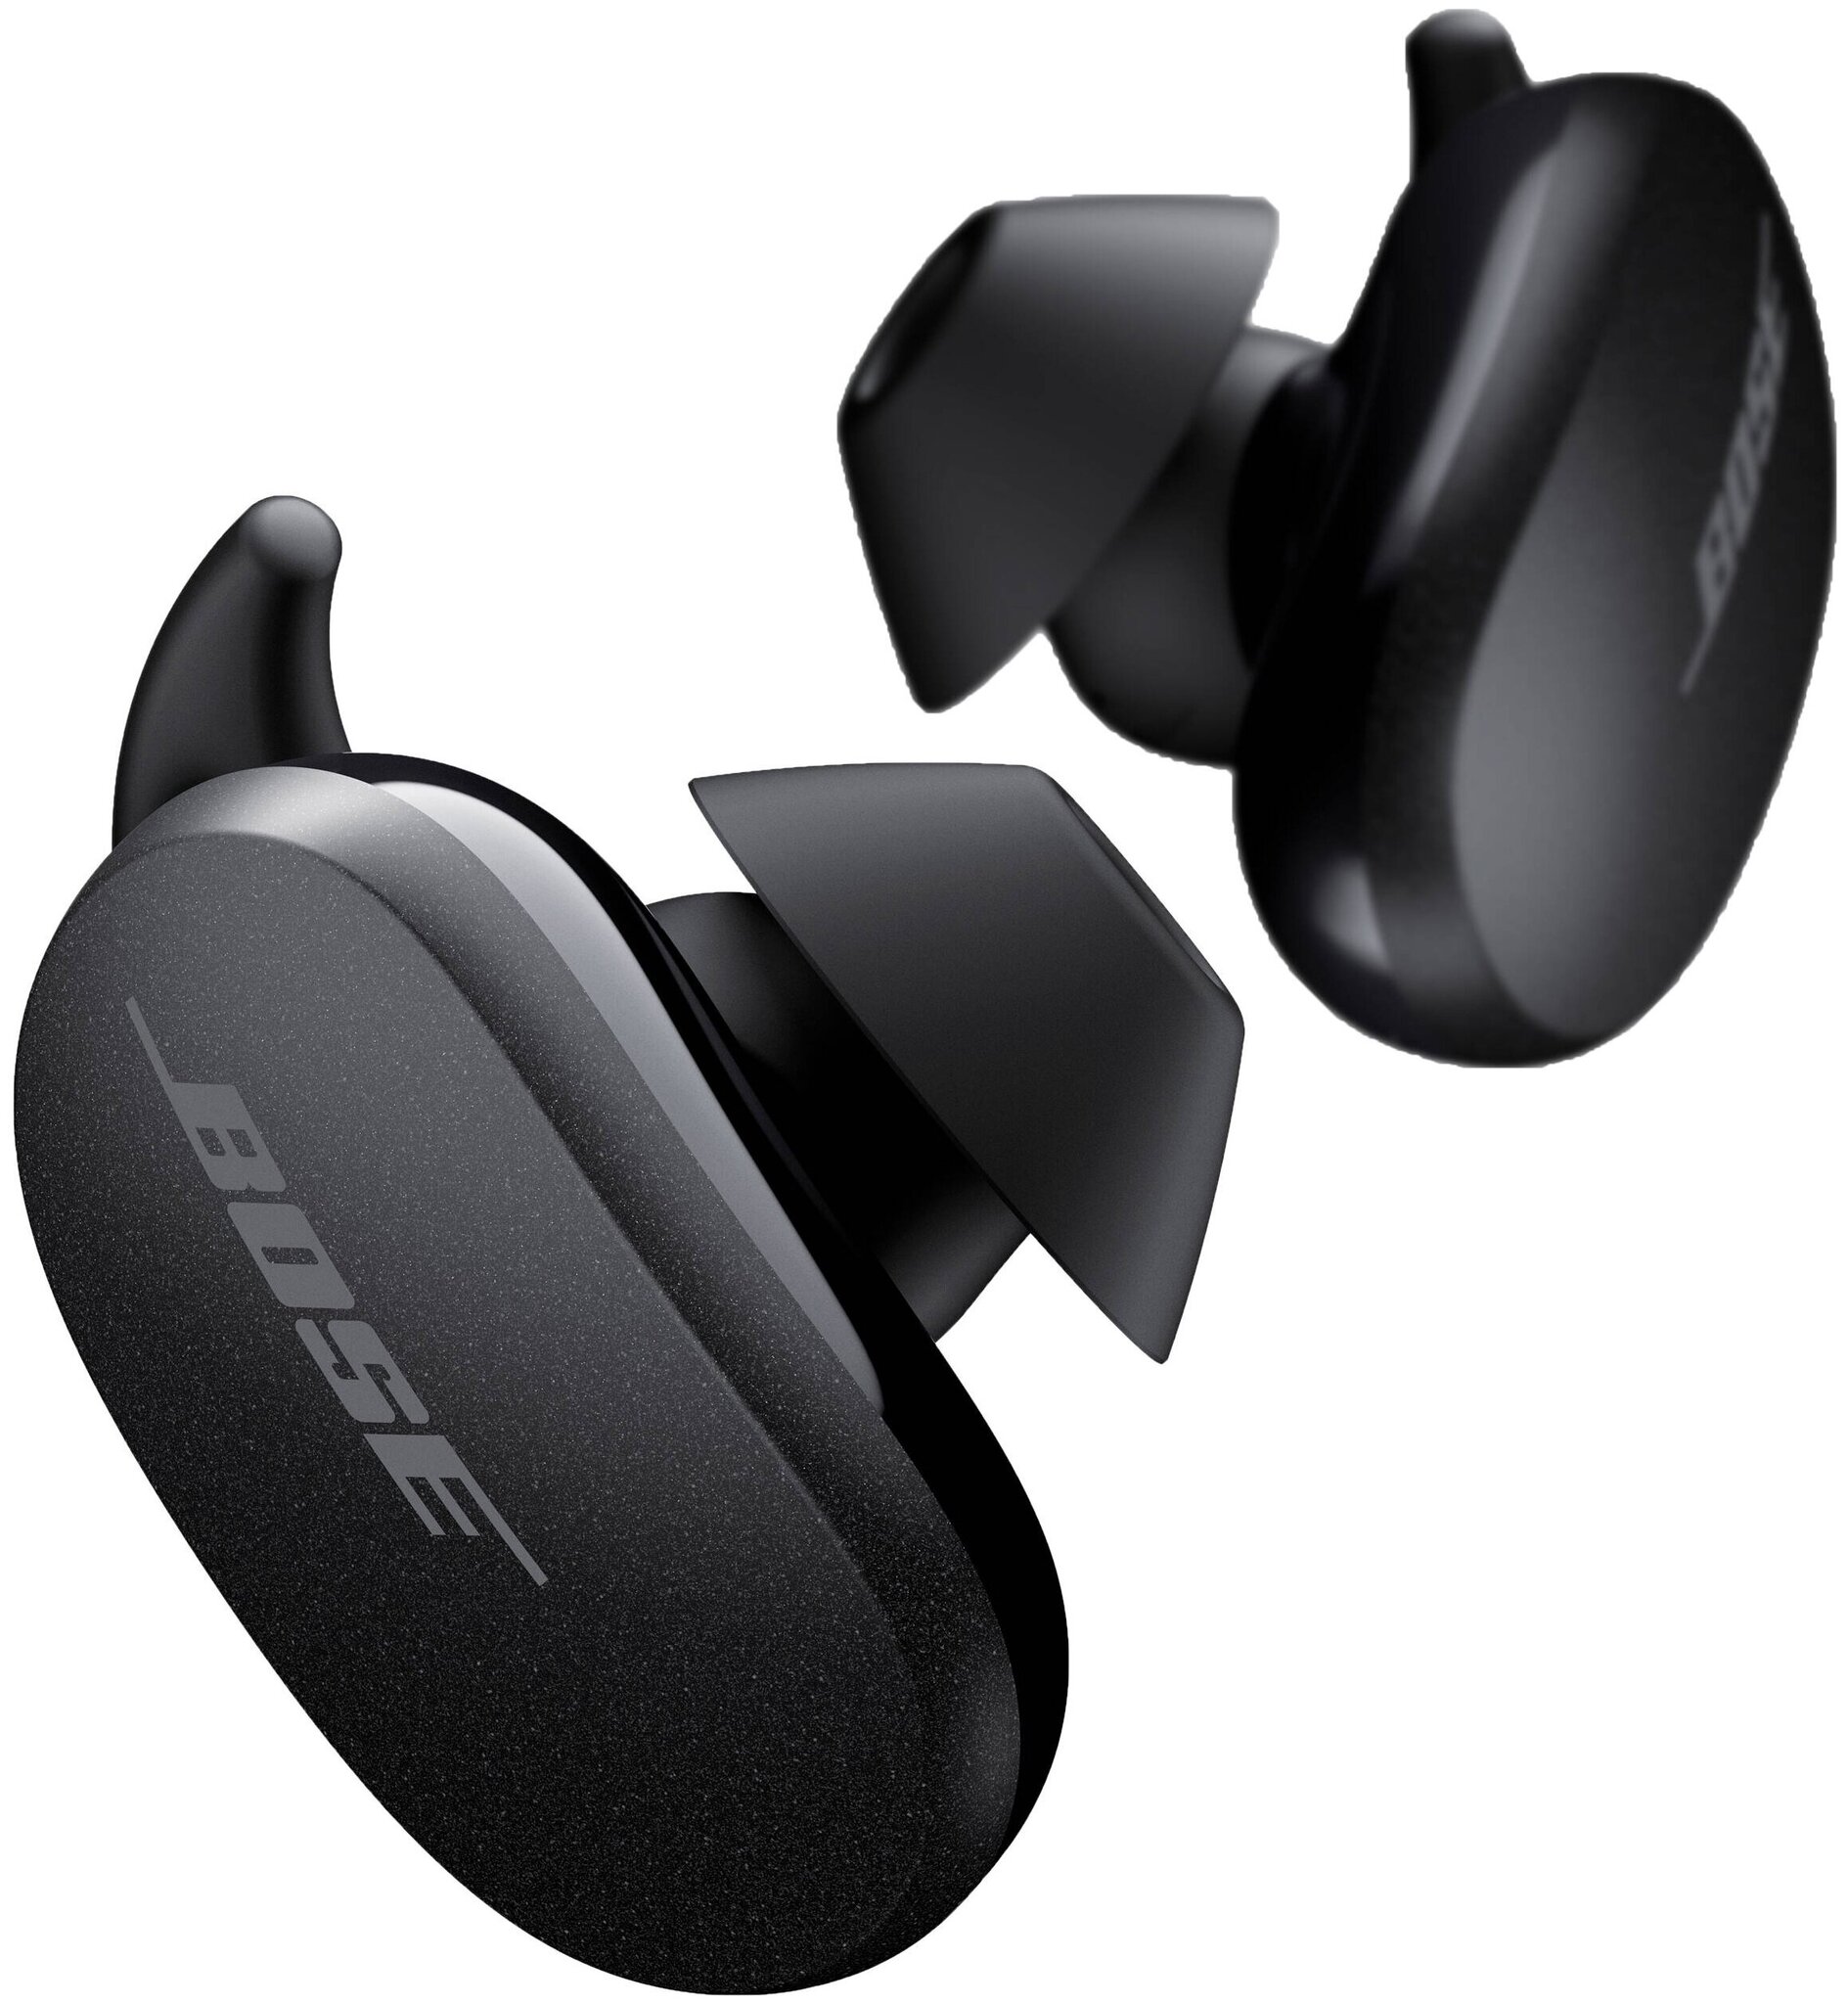 Наушники bose quietcomfort earbuds. Наушники Bose QUIETCOMFORT. Bose QUIETCOMFORT Earbuds Black. Bose QC Earbuds. Bose QUIETCOMFORT Earbuds 2 Black.